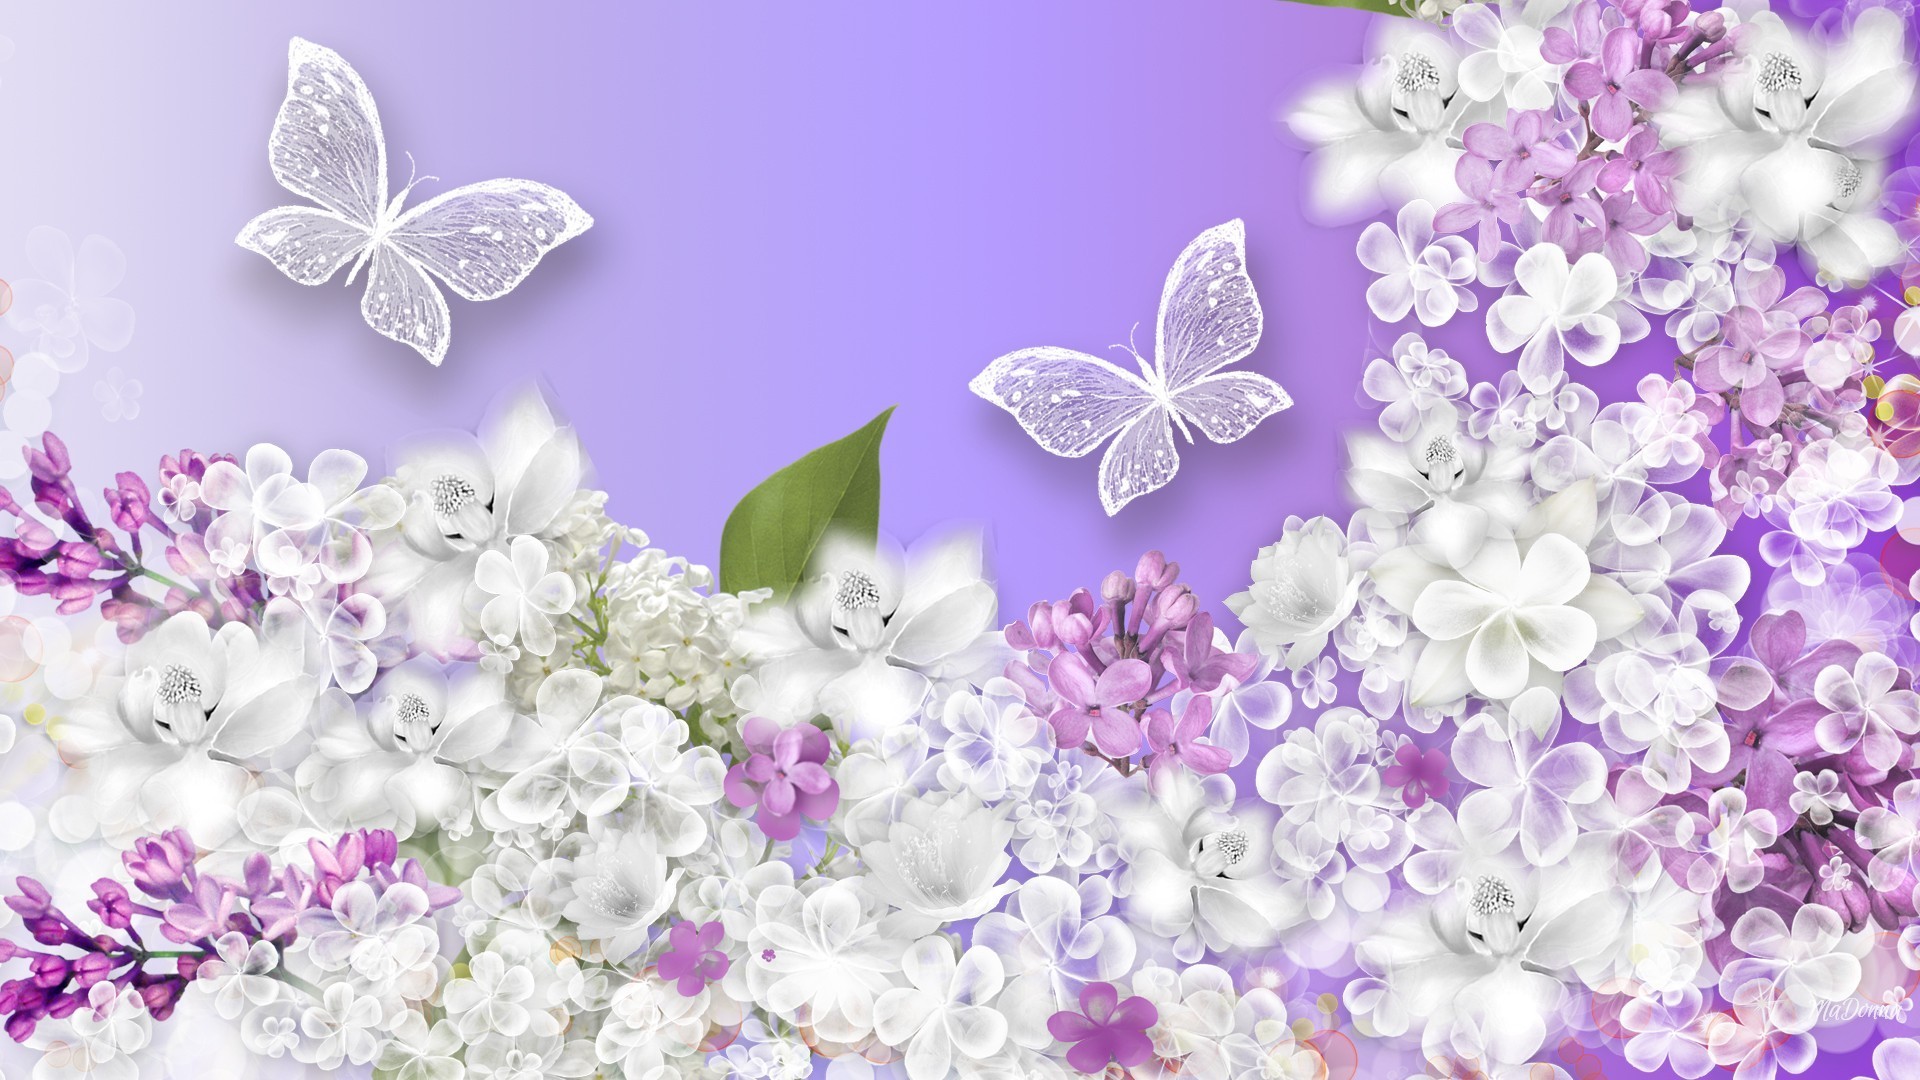 1920x1080 Fragrant Tag - Spring Shine Plumeria Lilacs Lavender Purple Fragrant Glow  Perfume Sweet Lacy Butterflies Fragrance